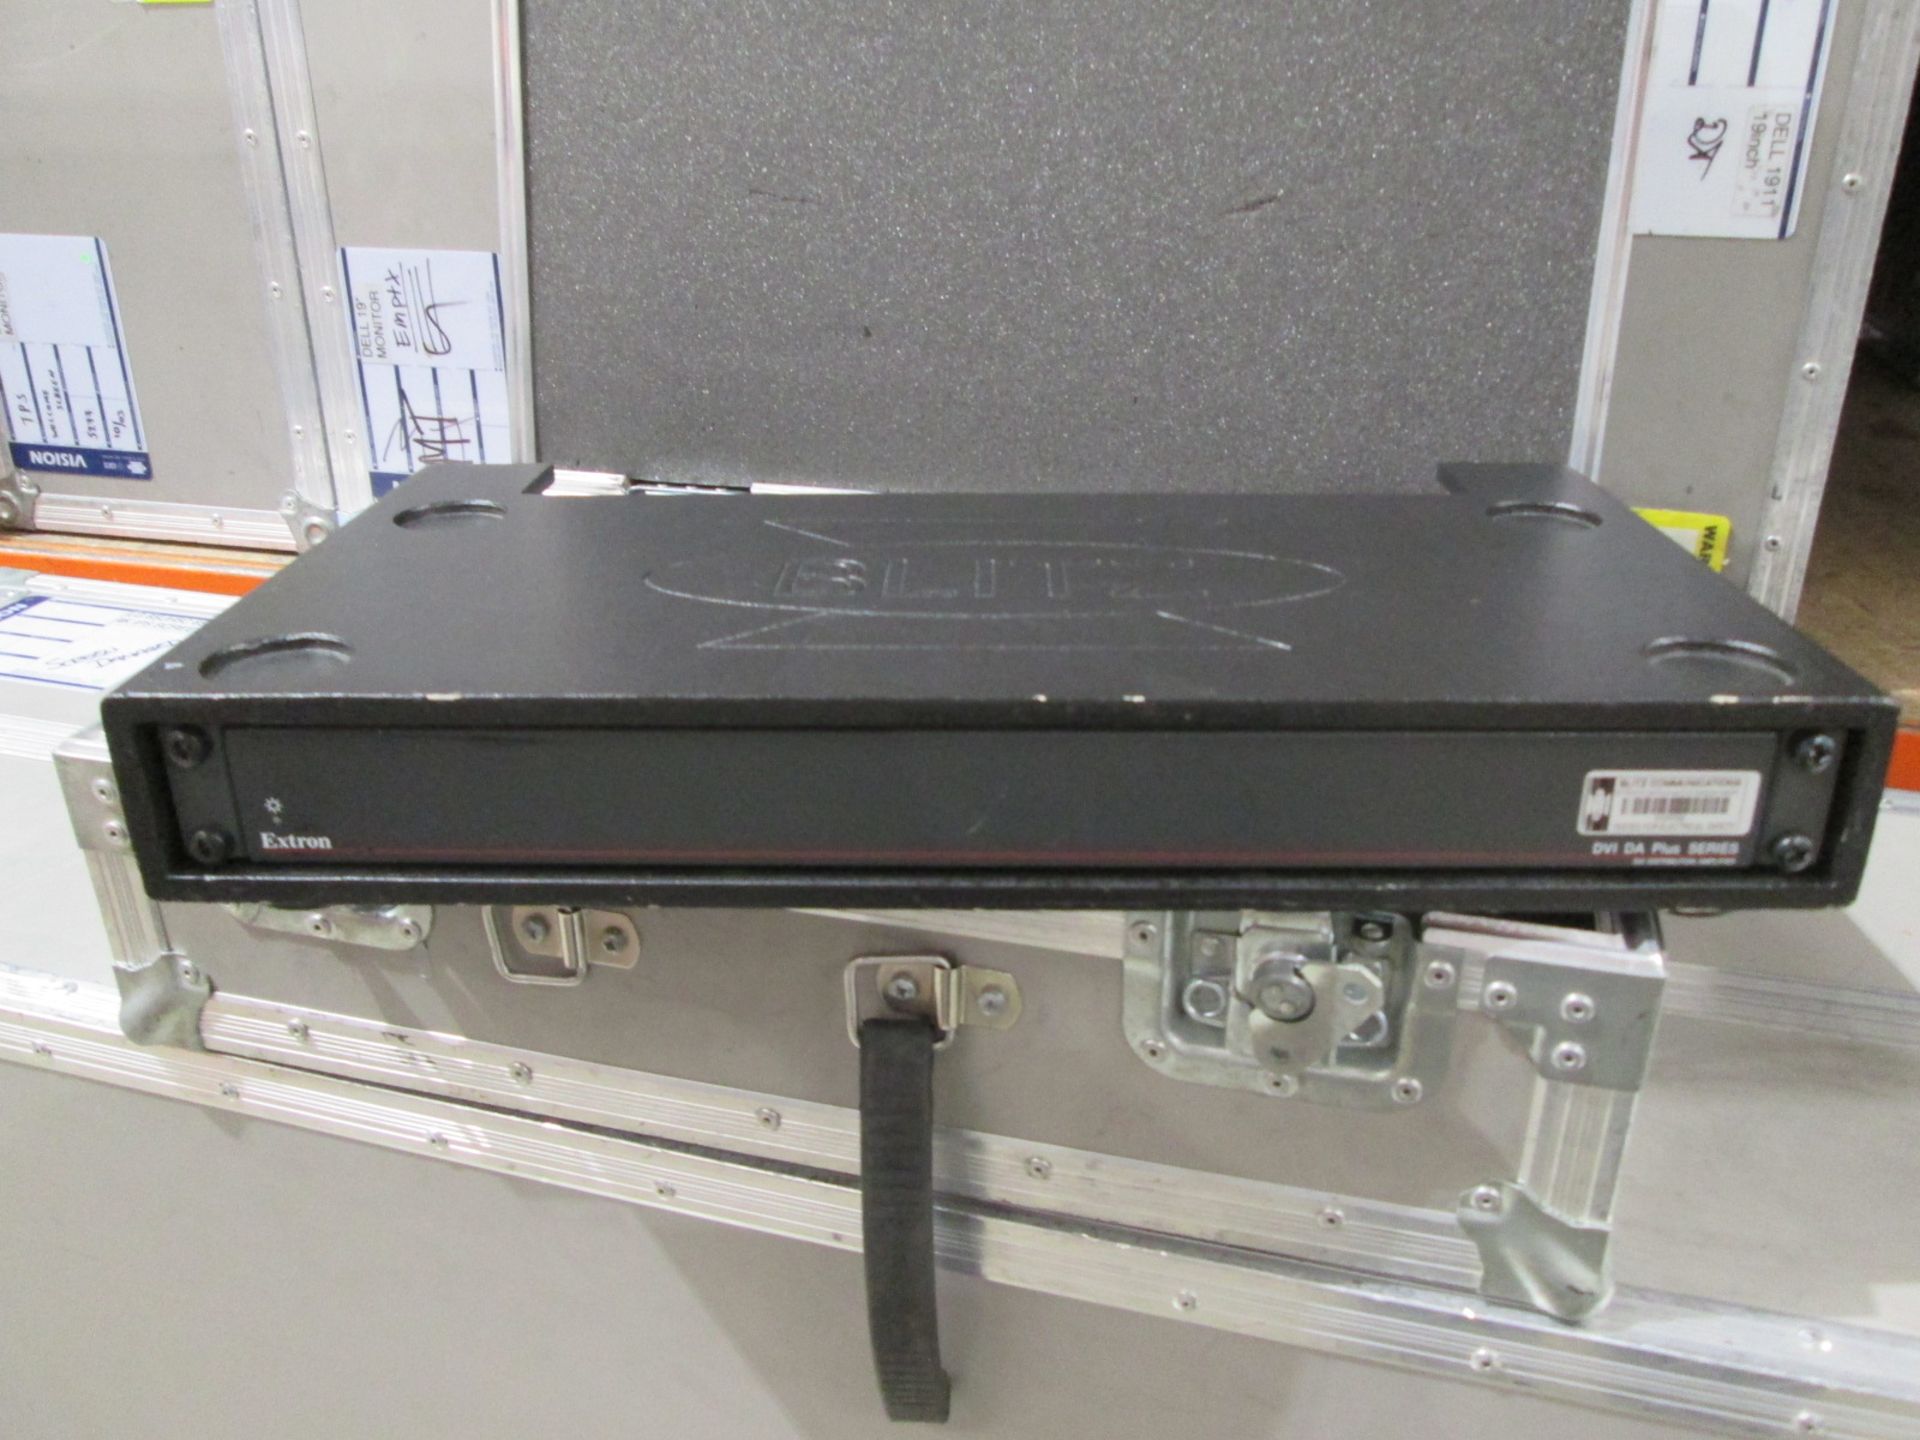 Extron DVI DA8 Plus 1:8 distribution Amplifers, In flight cases (Qty 4)